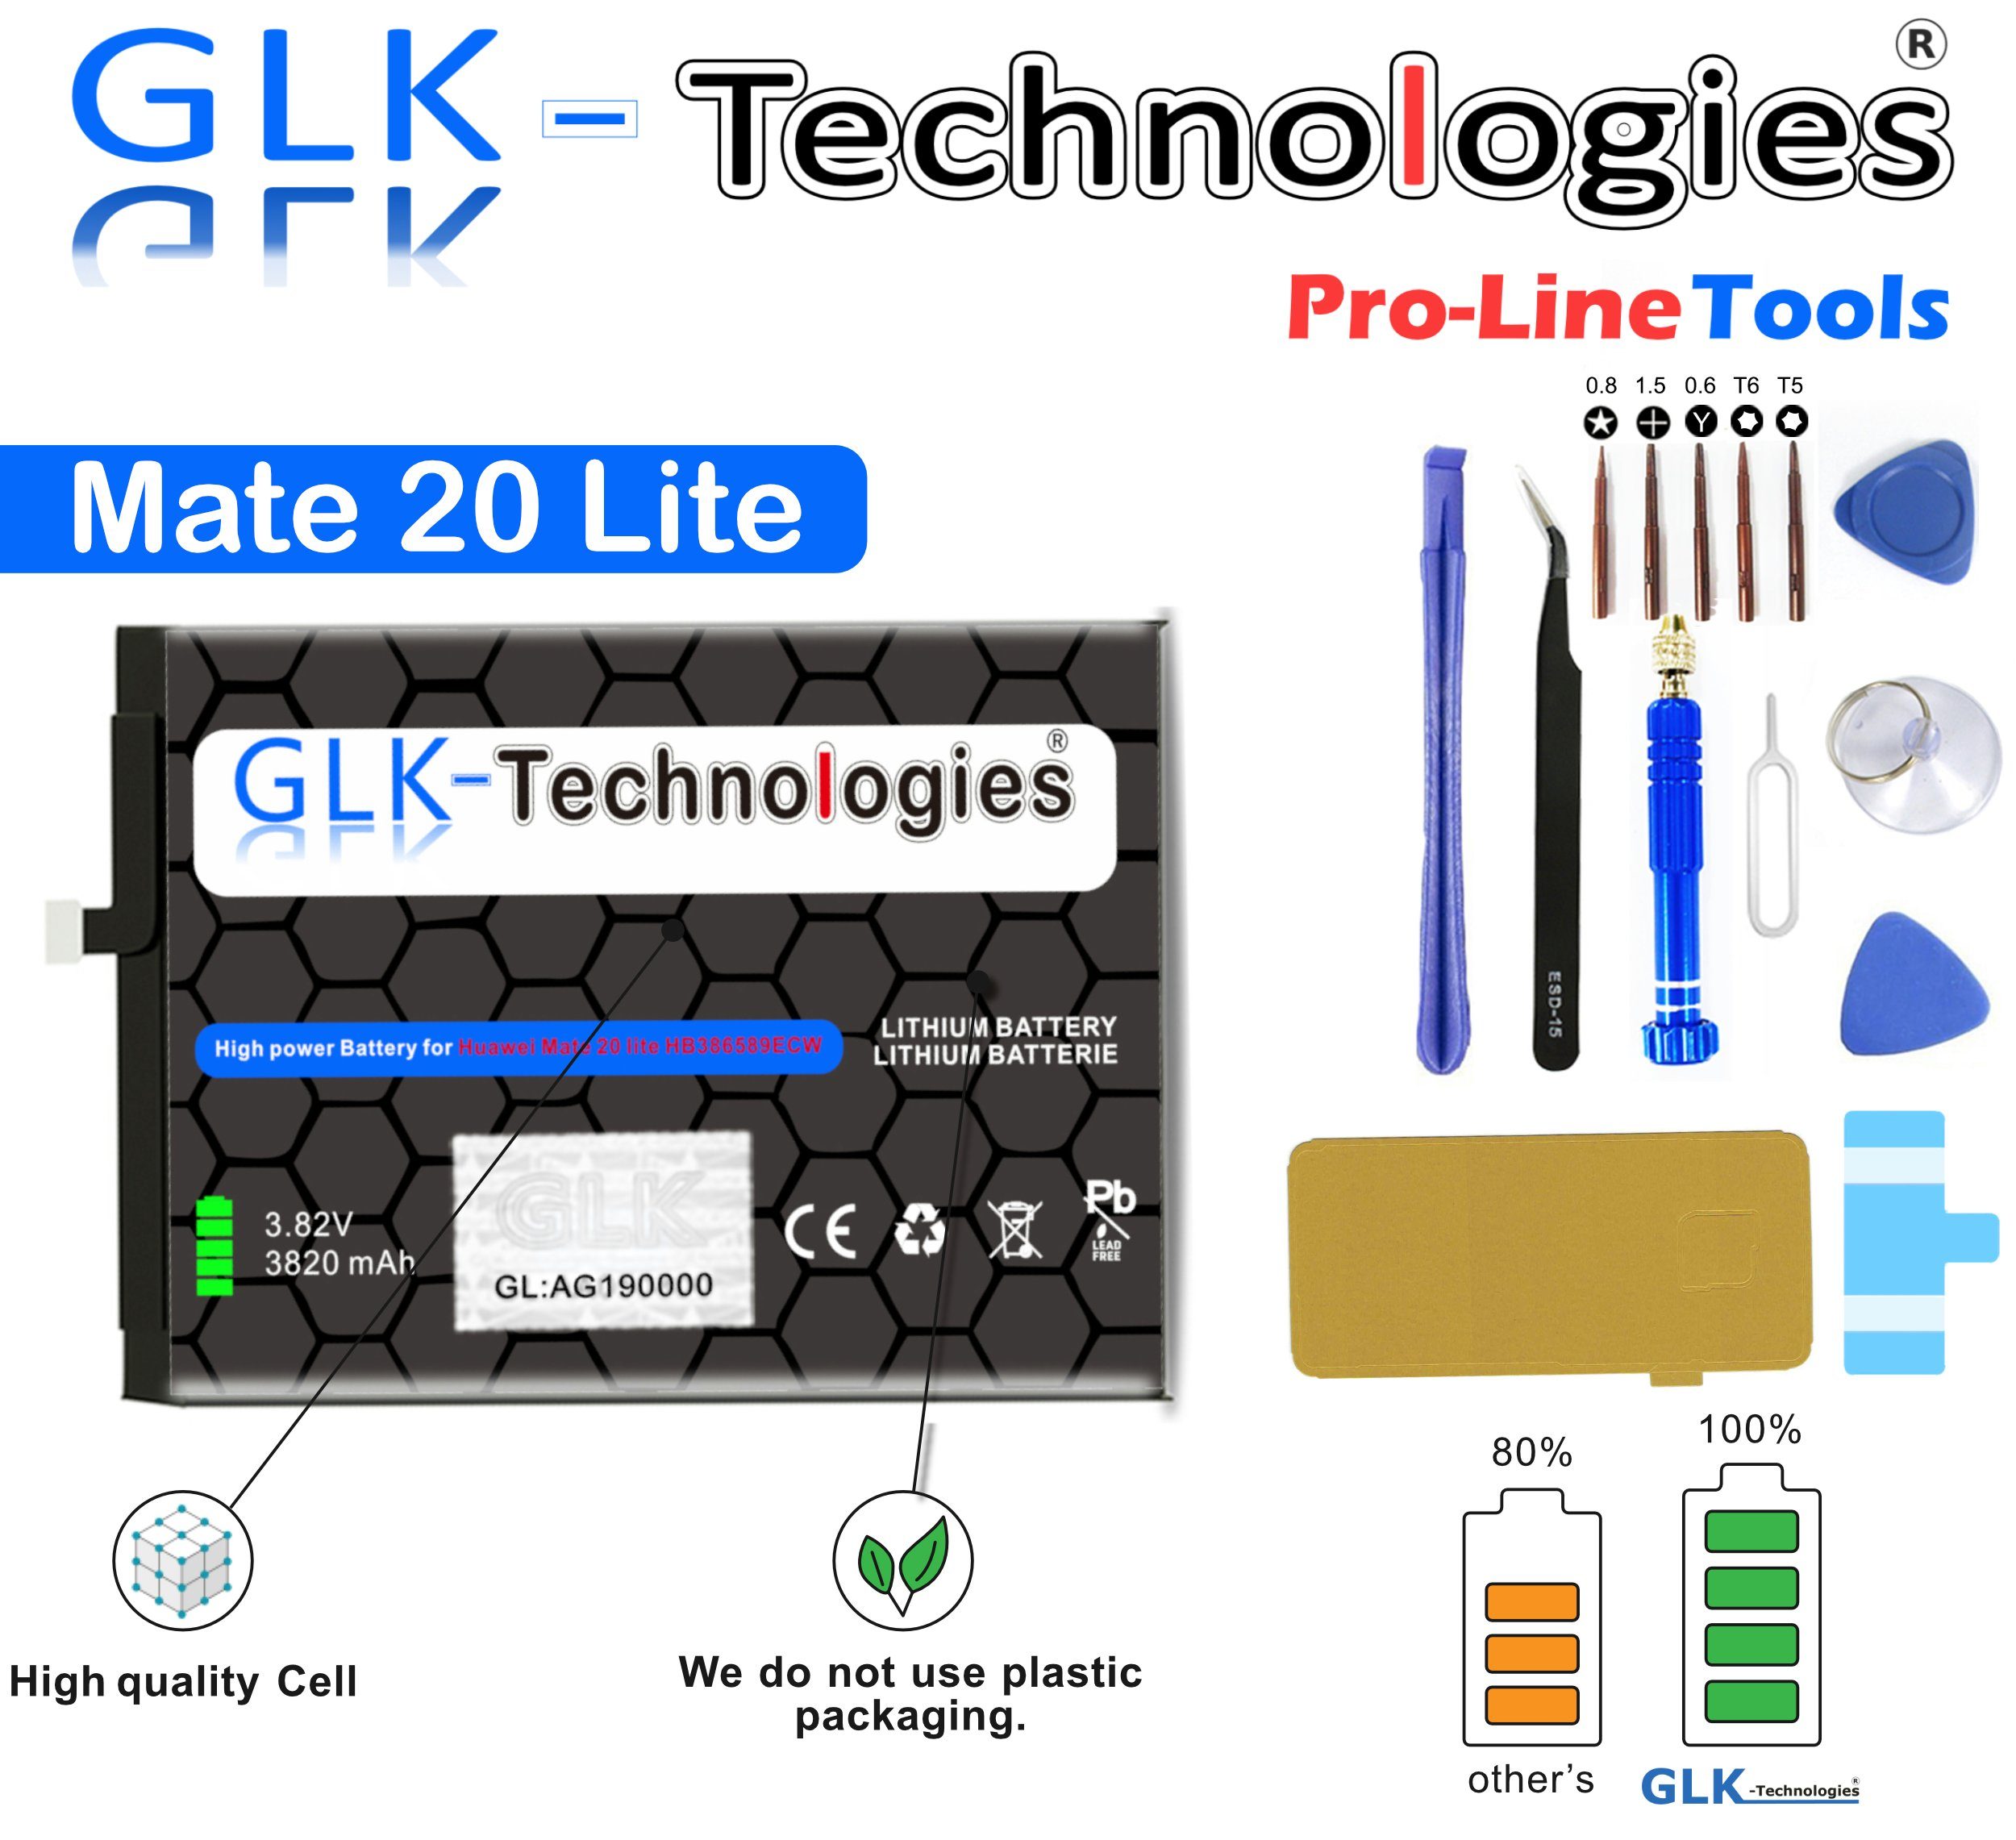 Huawei für / Akku Power Honor V) inkl. Kit 20 High Set 3820 GLK-Technologies (3,8 Plus Mate / mAh Profi Lite P10 Ersatz Smartphone-Akku Werkzeug